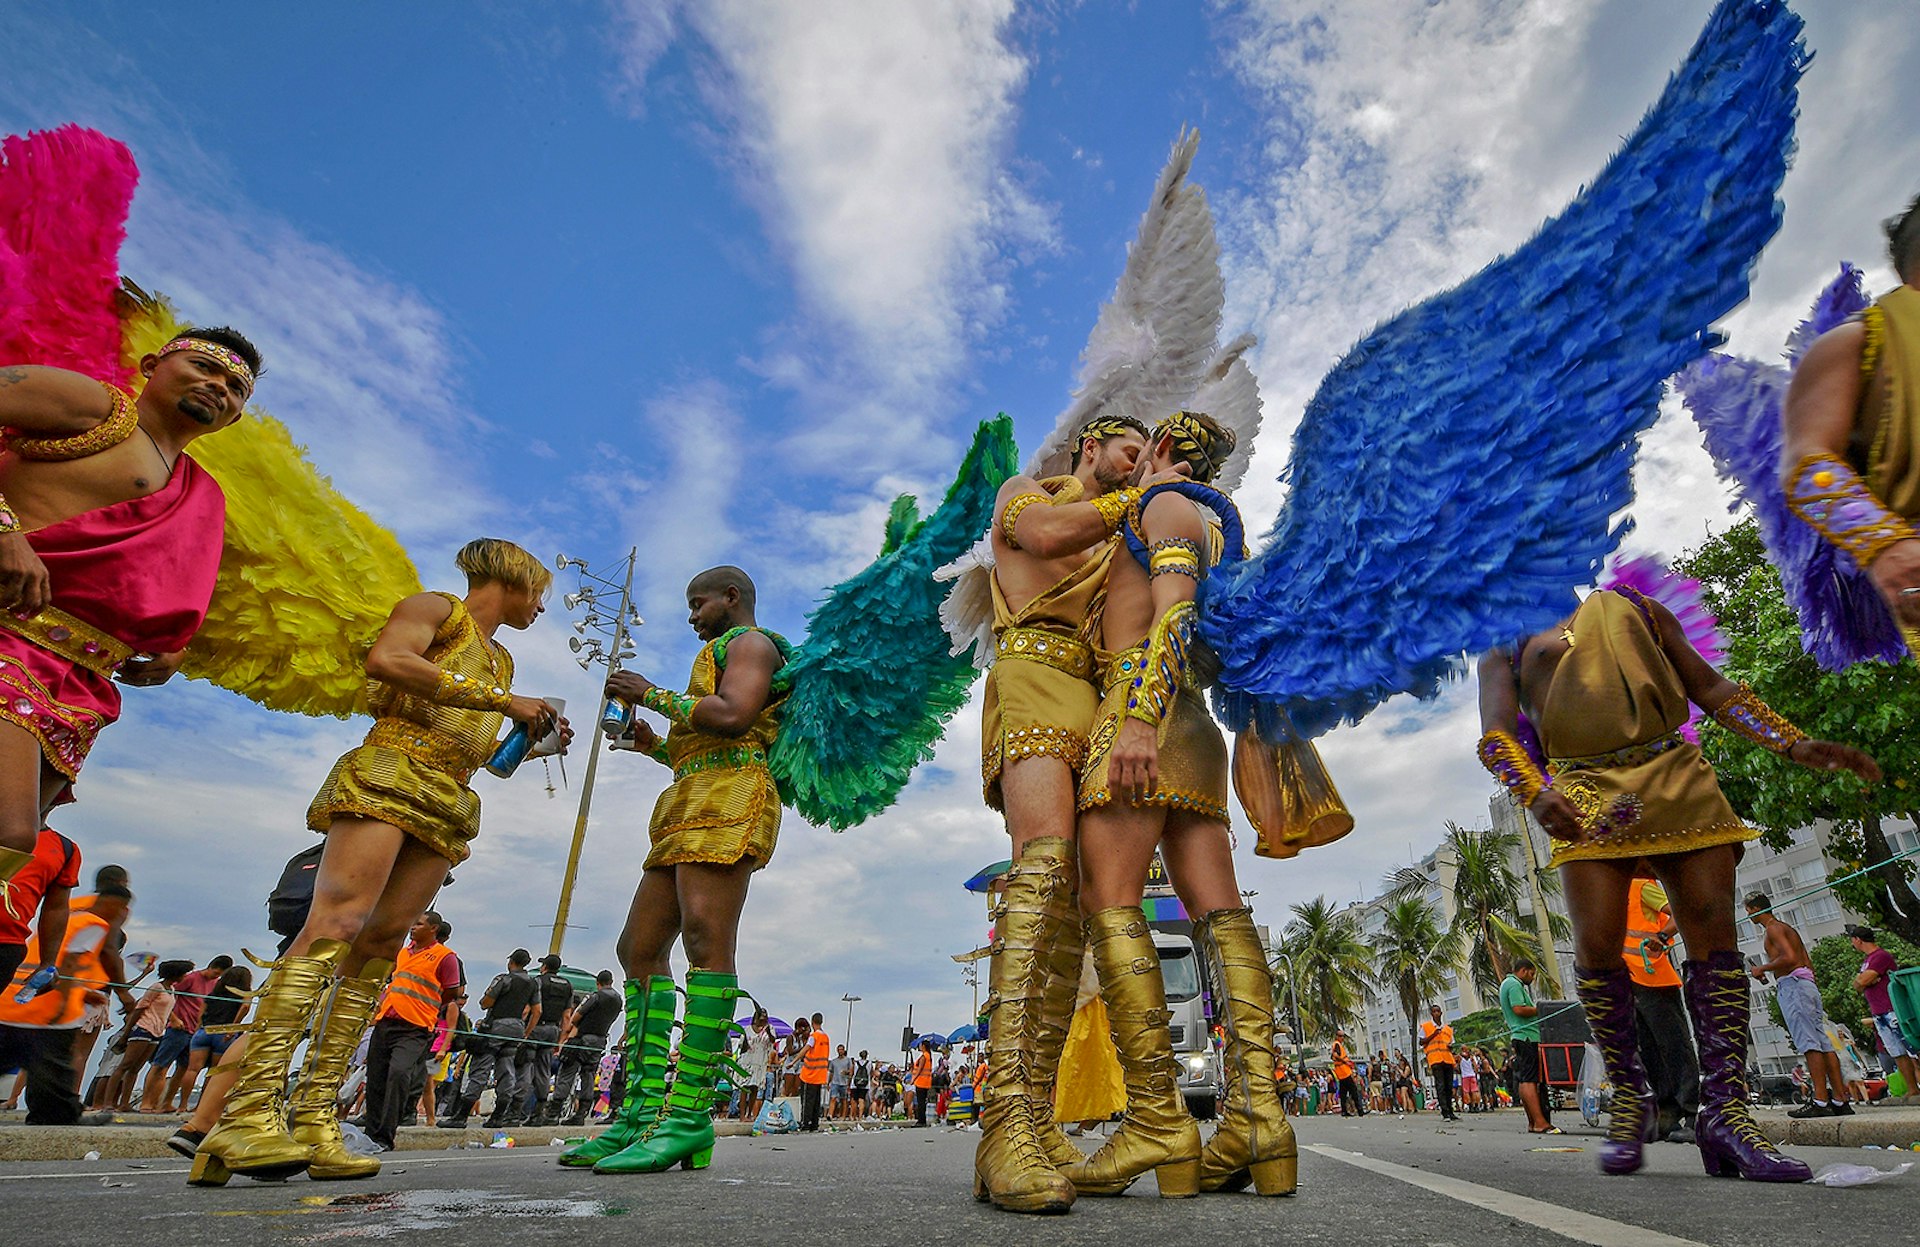 Men dressed as angels kiss at Rio de Janeiro's Pride festiavl© CARL DE SOUZA / Getty Images